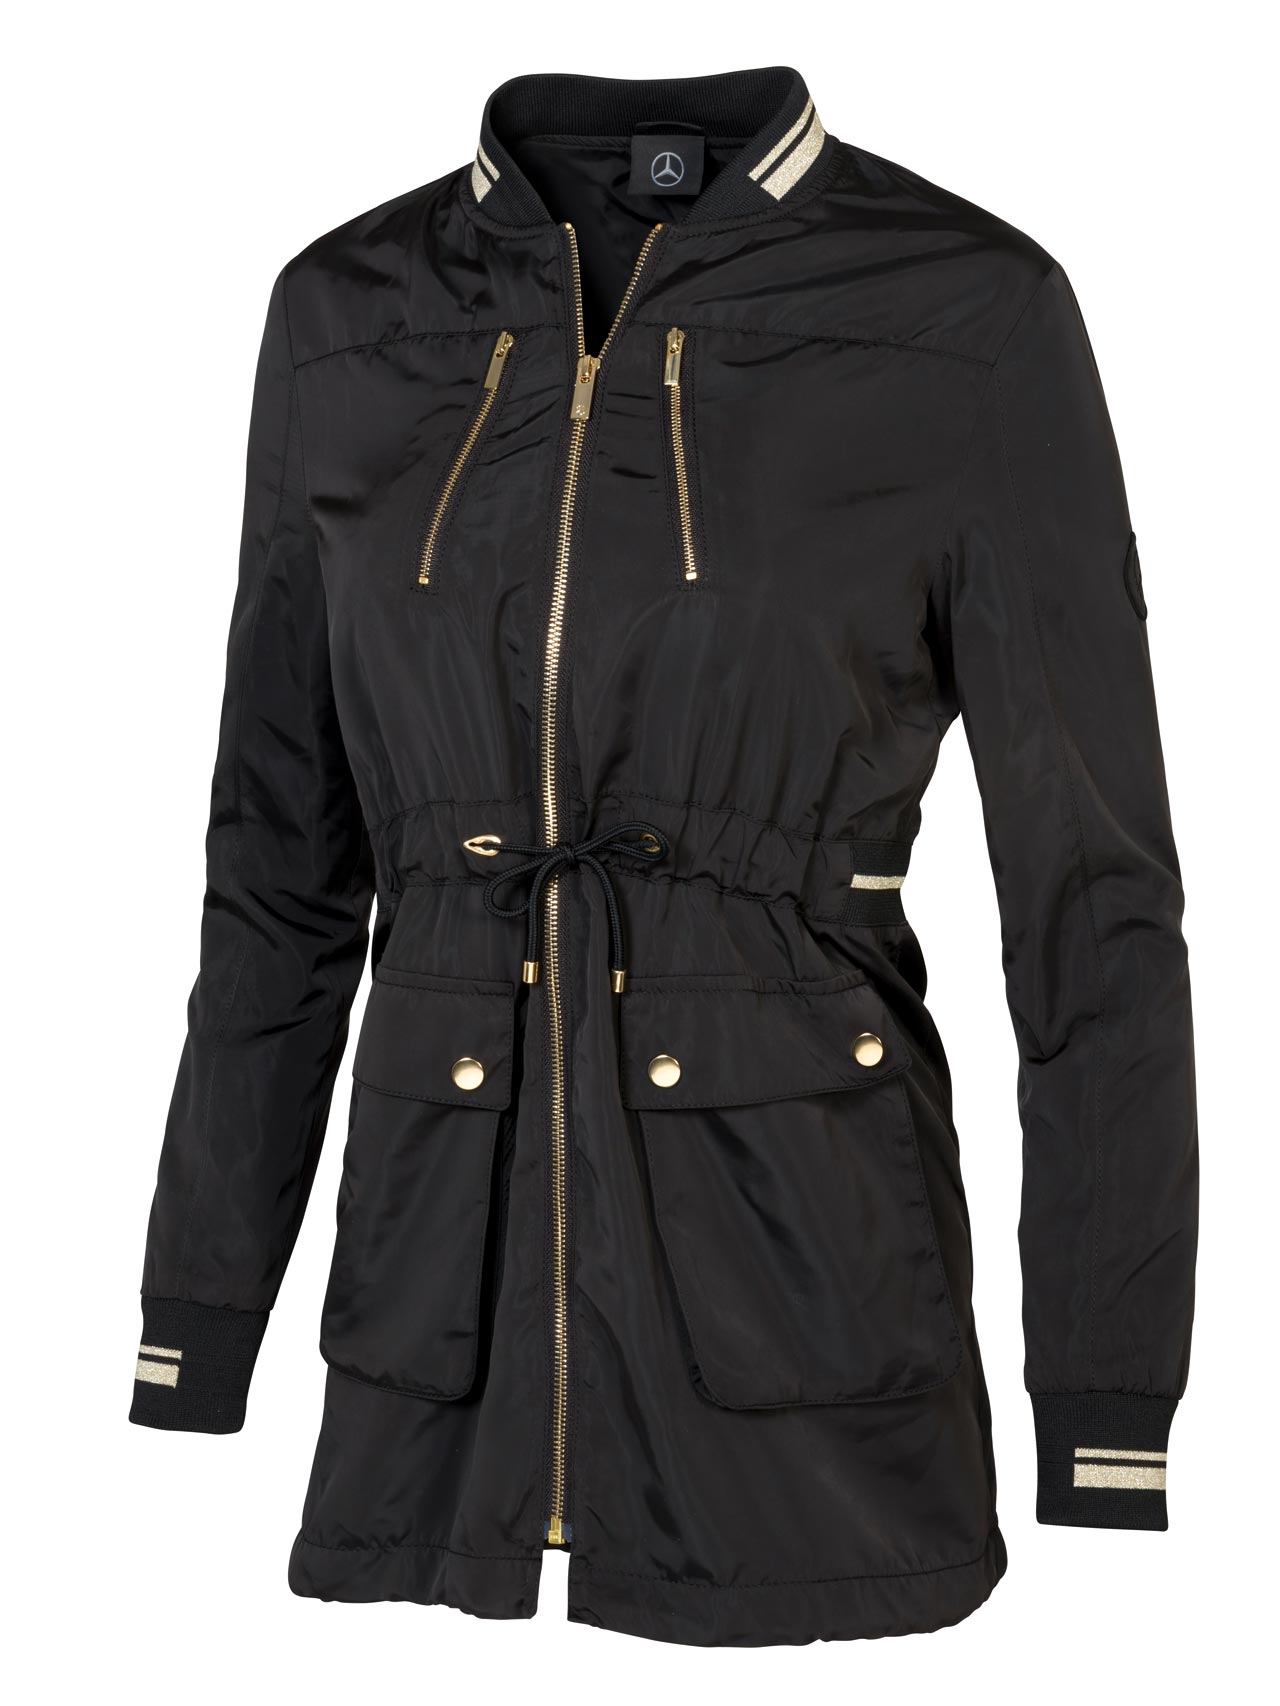 Women's jacket, Mercedes-Benz Collection-B66958656